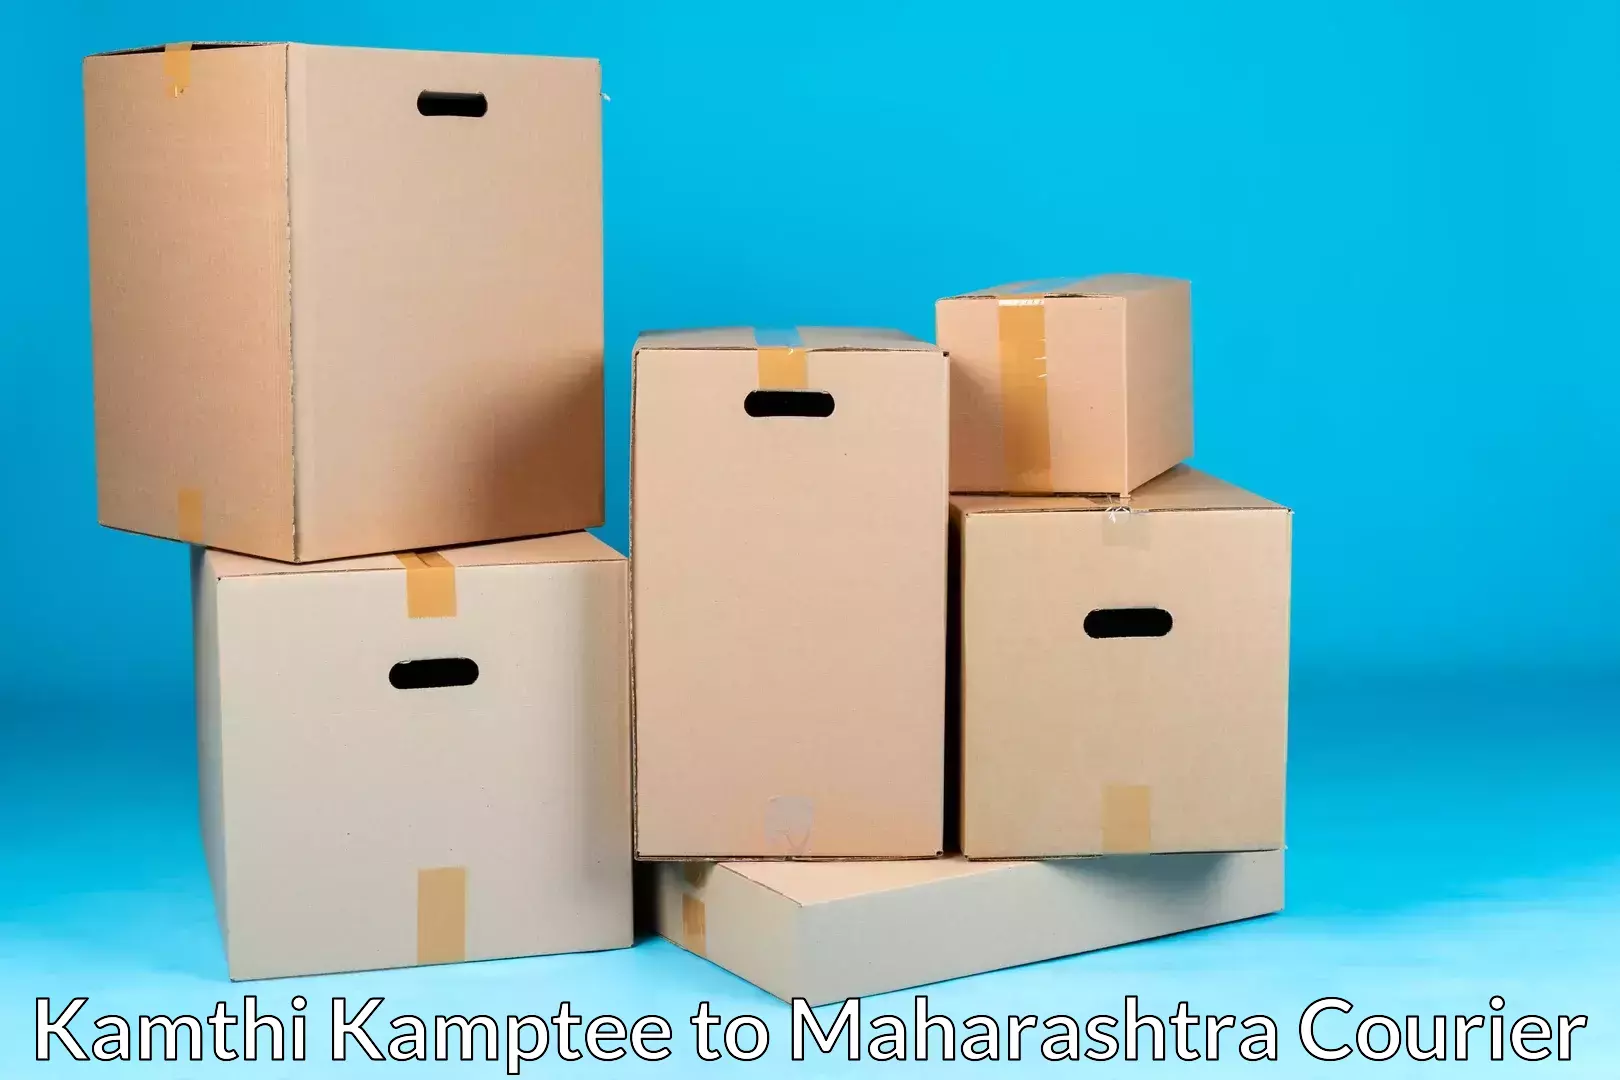 Furniture moving experts Kamthi Kamptee to Mahim